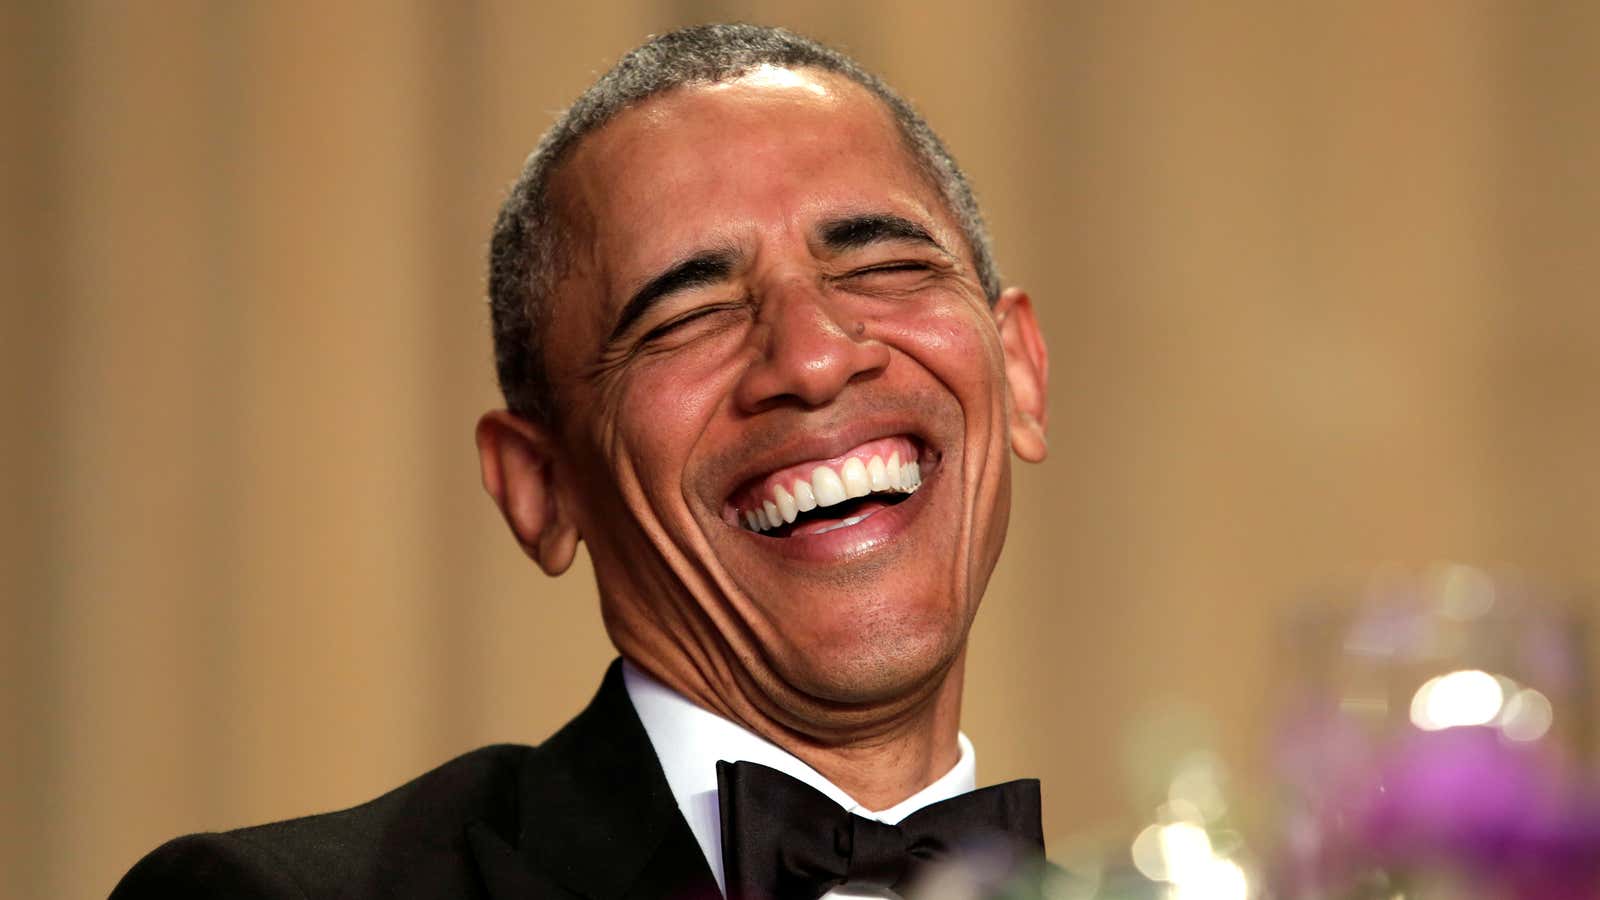 Barack Obama: high-status laugher?